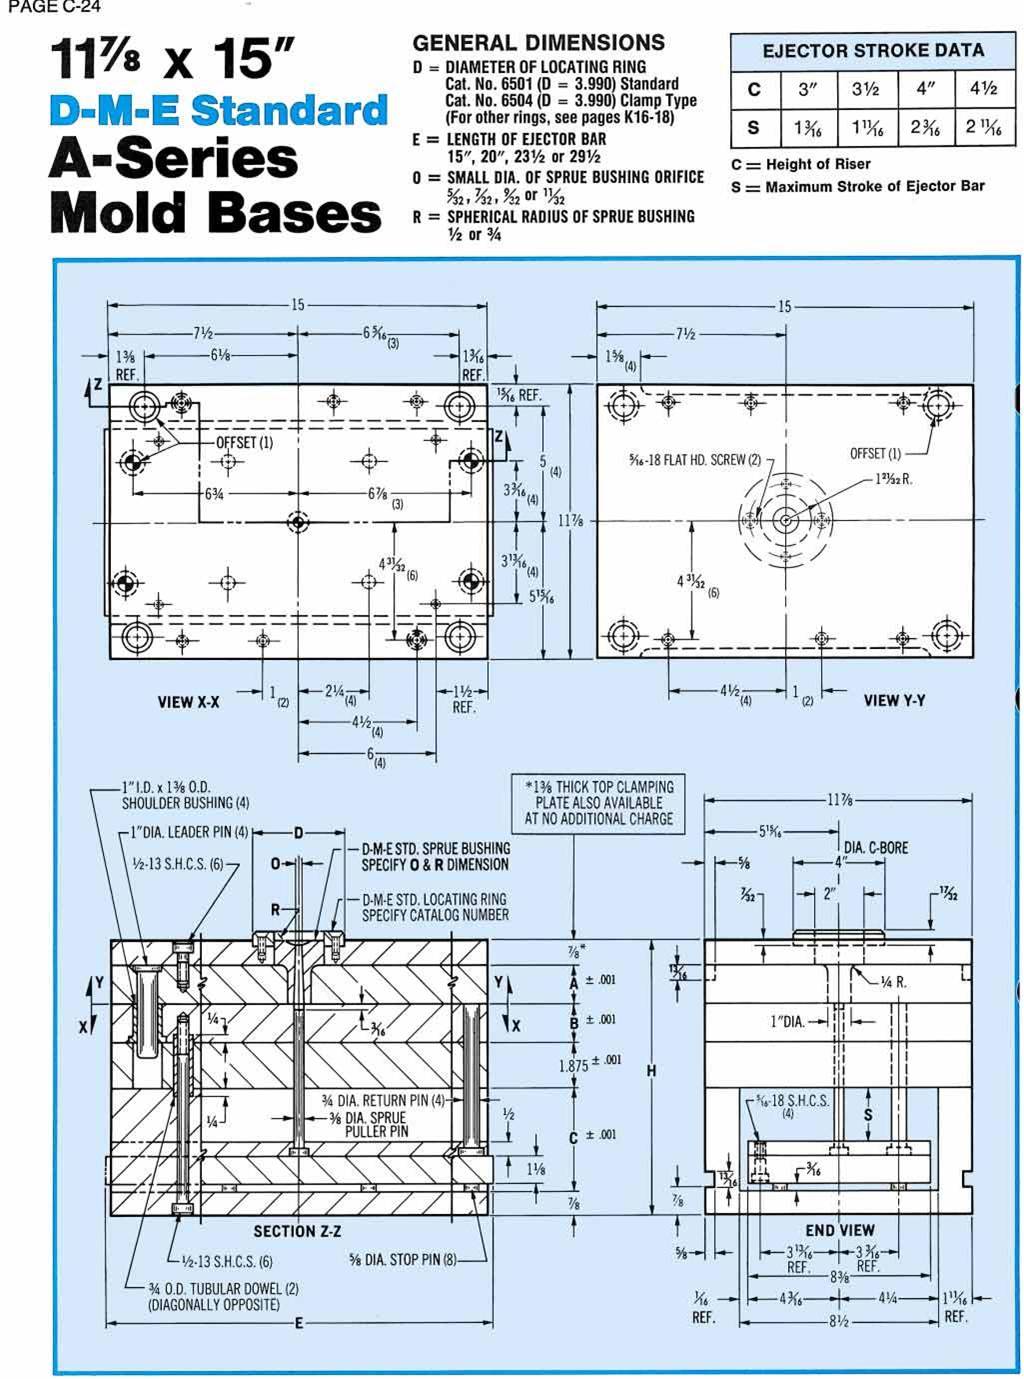 DME A series mold base 1215A